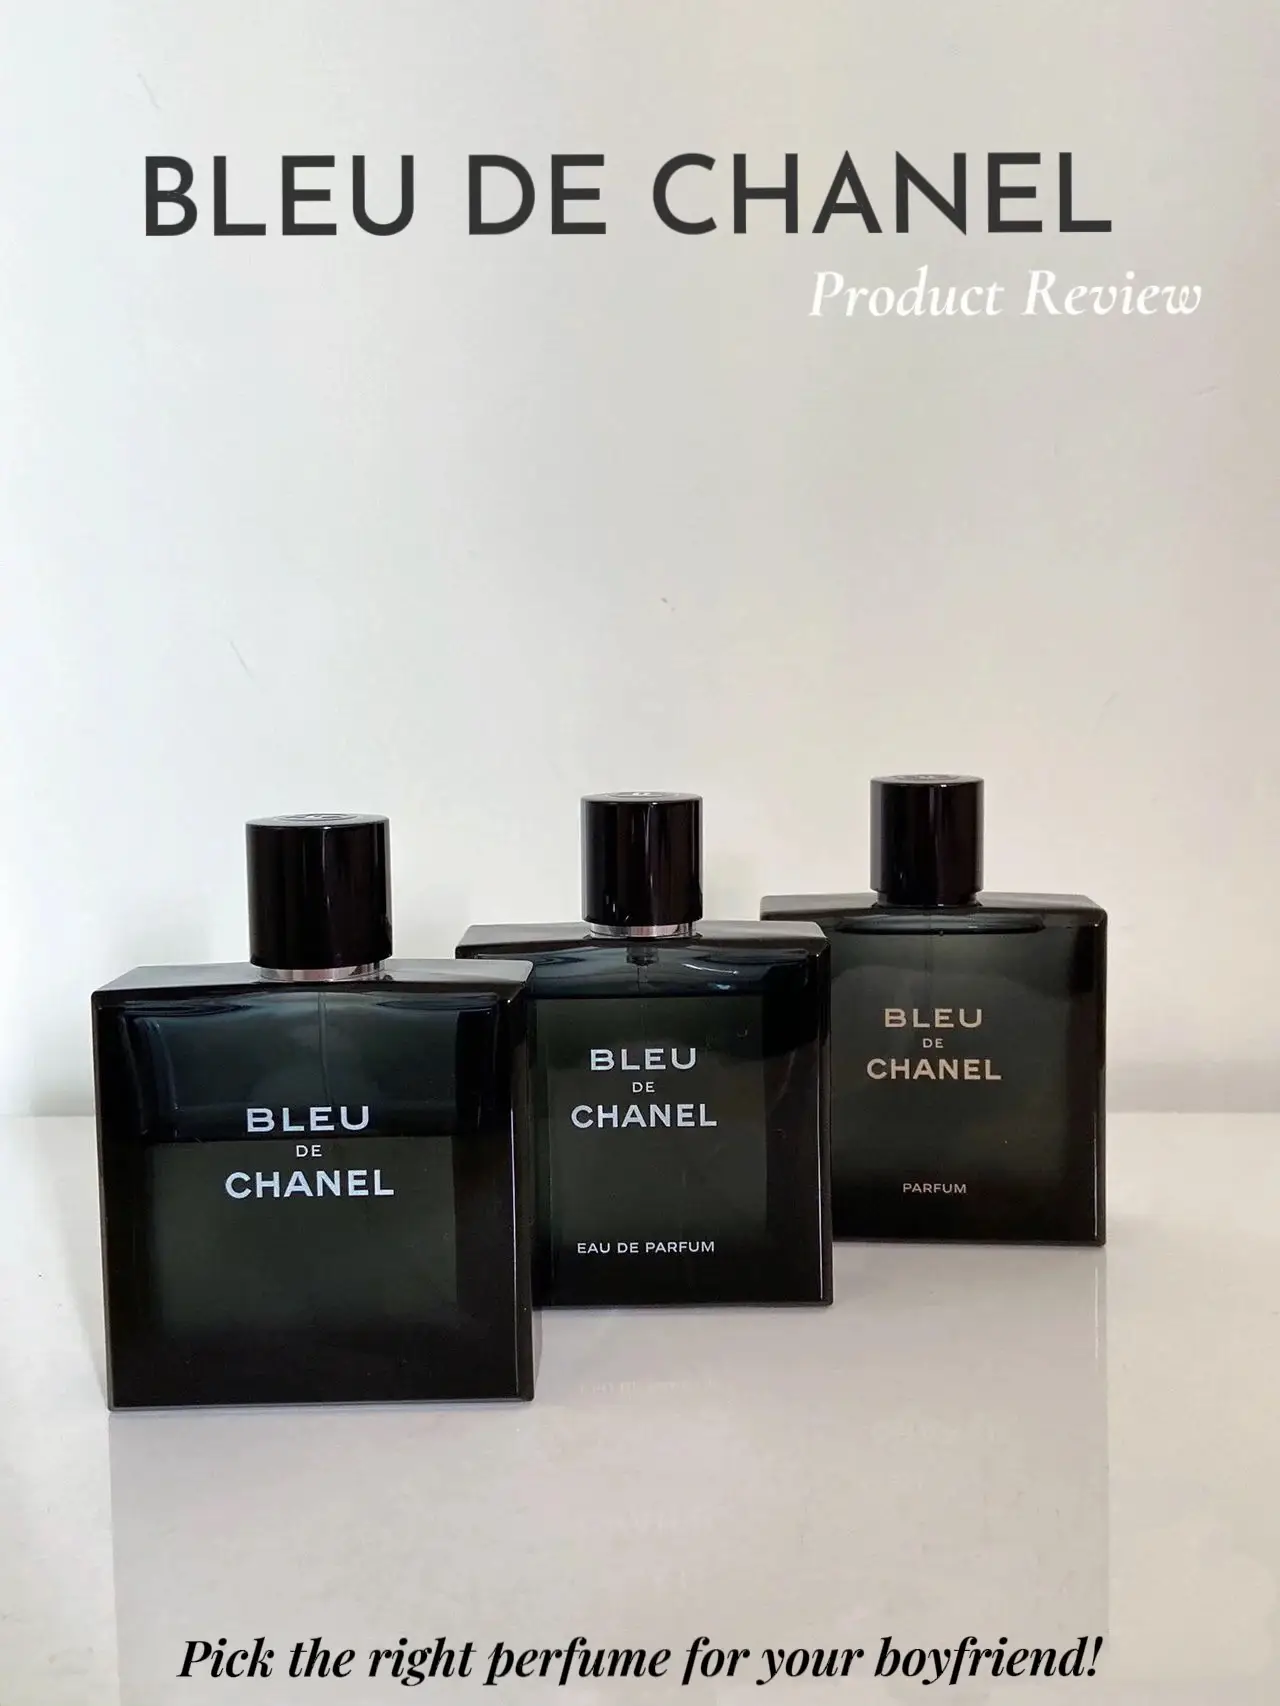 chanel perfume collection set